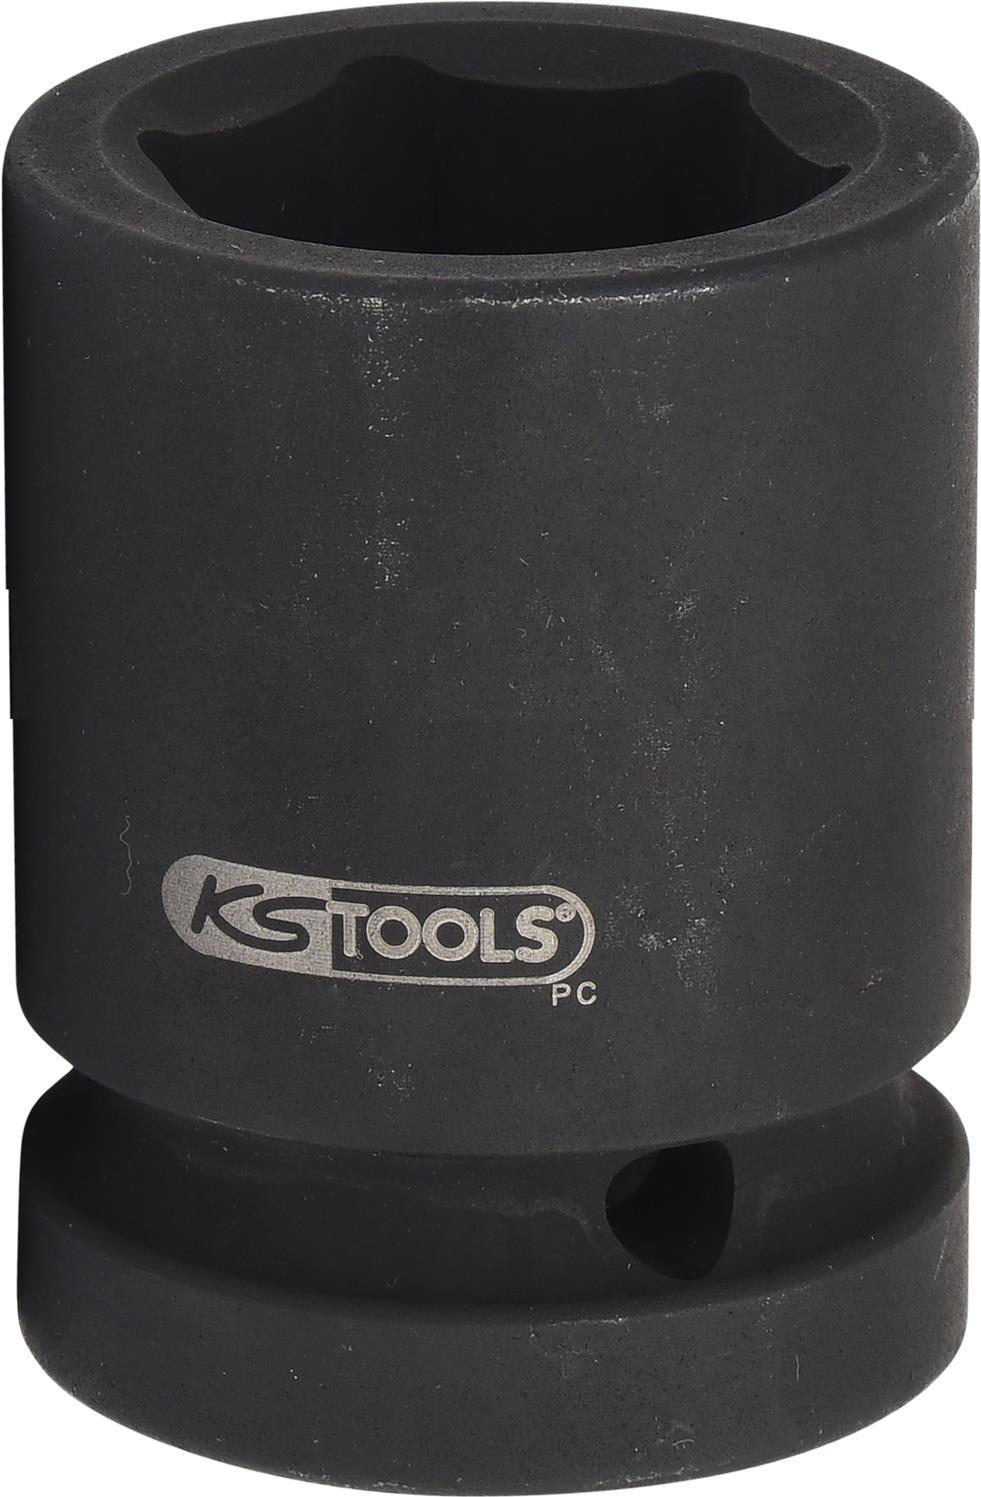 KS TOOLS Werkzeuge-Maschinen GmbH 3.1/2 Sechskant-Kraft-Stecknuss, 145 mm (515.2219) von KS TOOLS